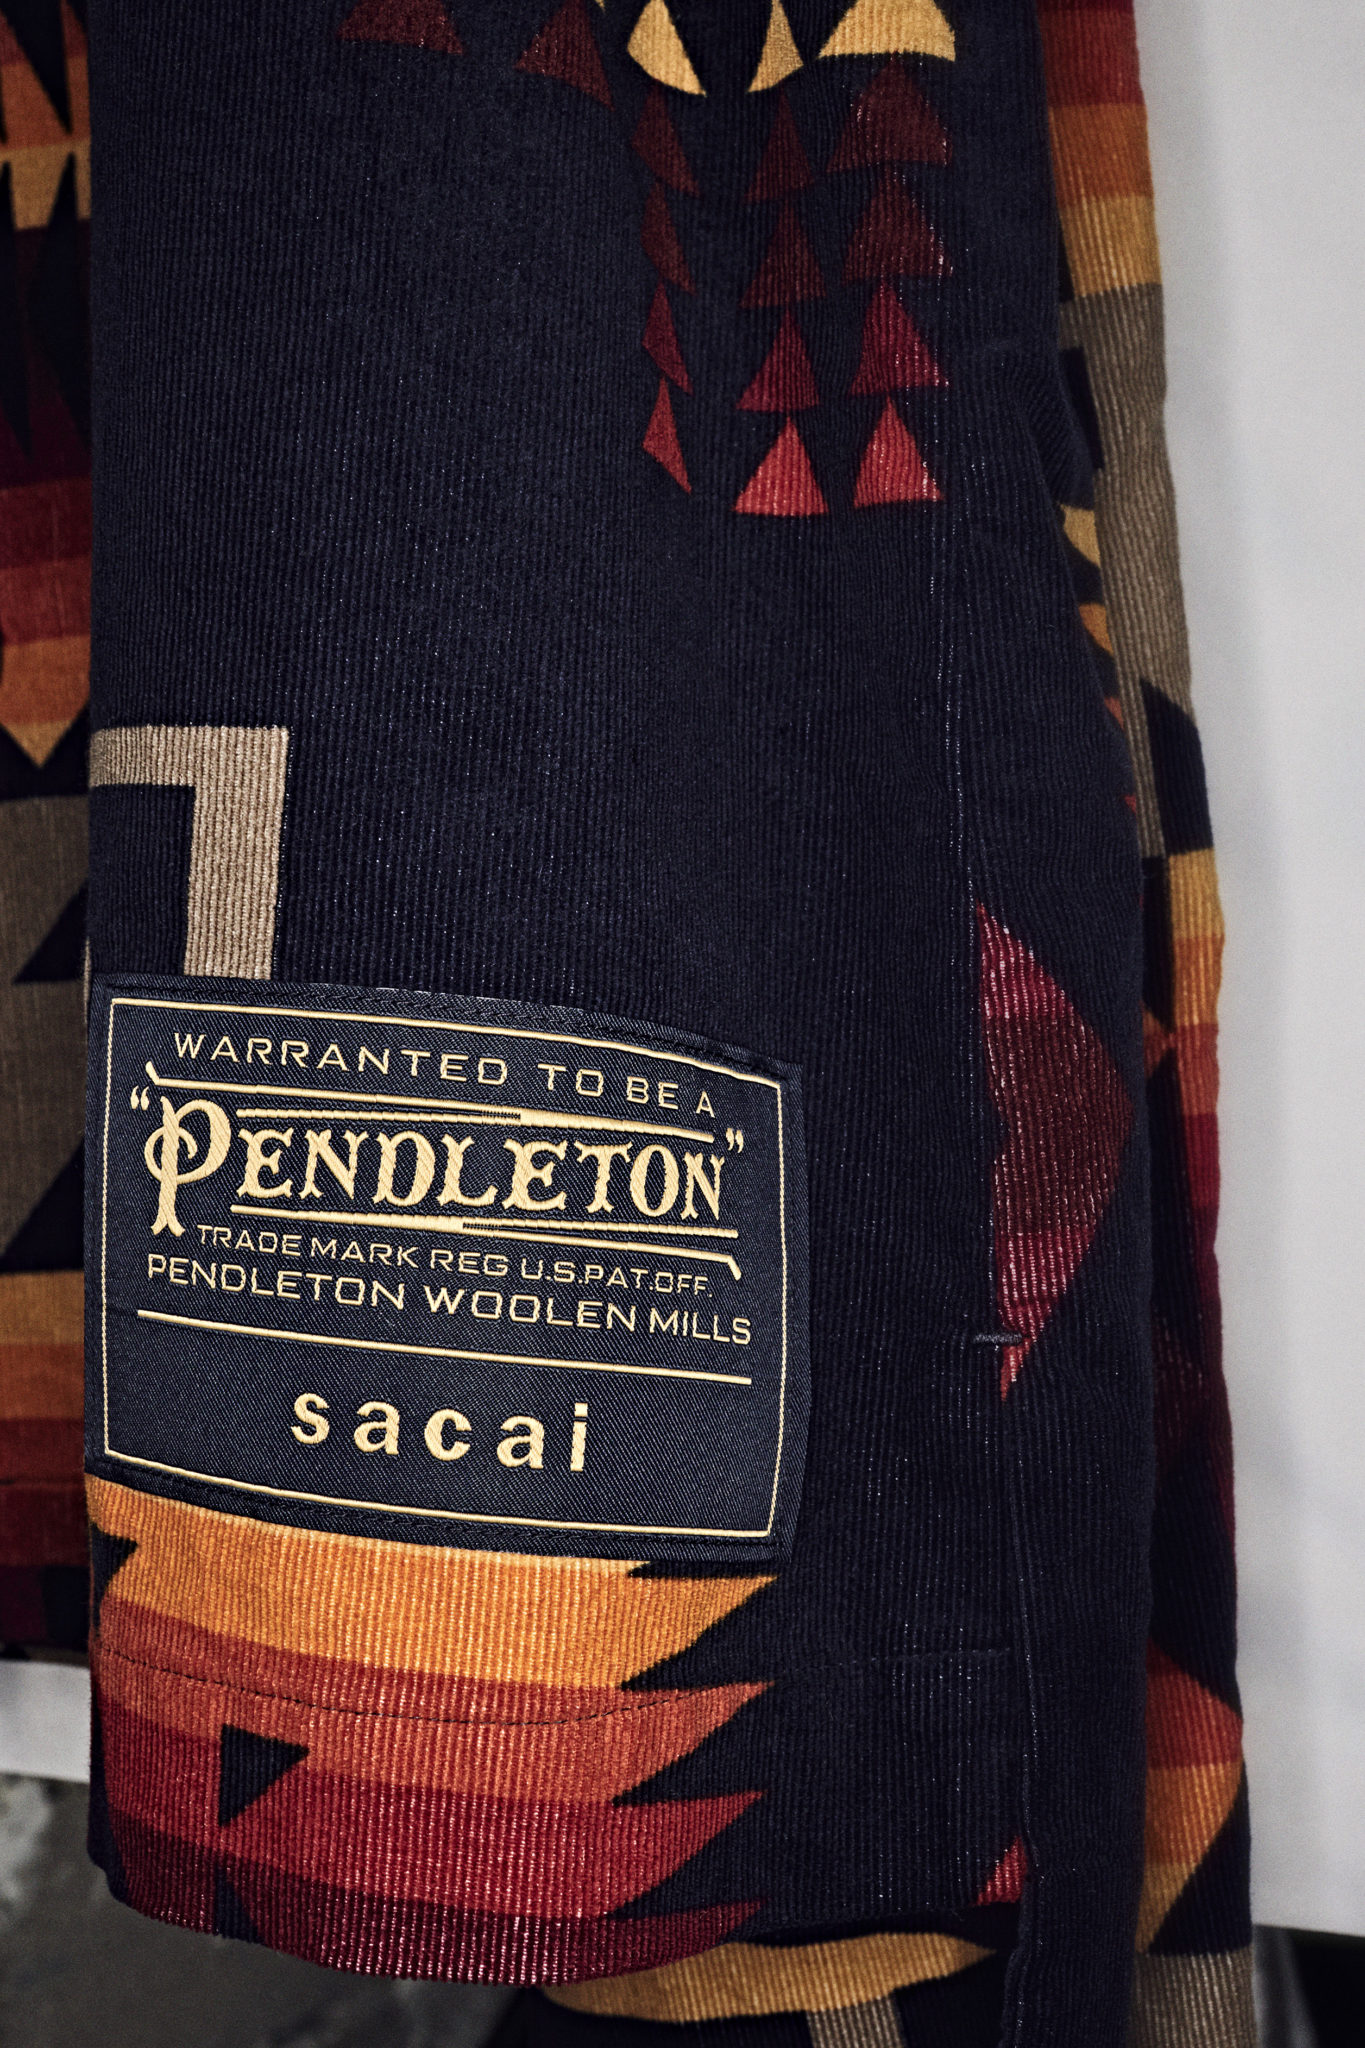 sacai x Pendleton-backstage (3) – A Shaded View on Fashion